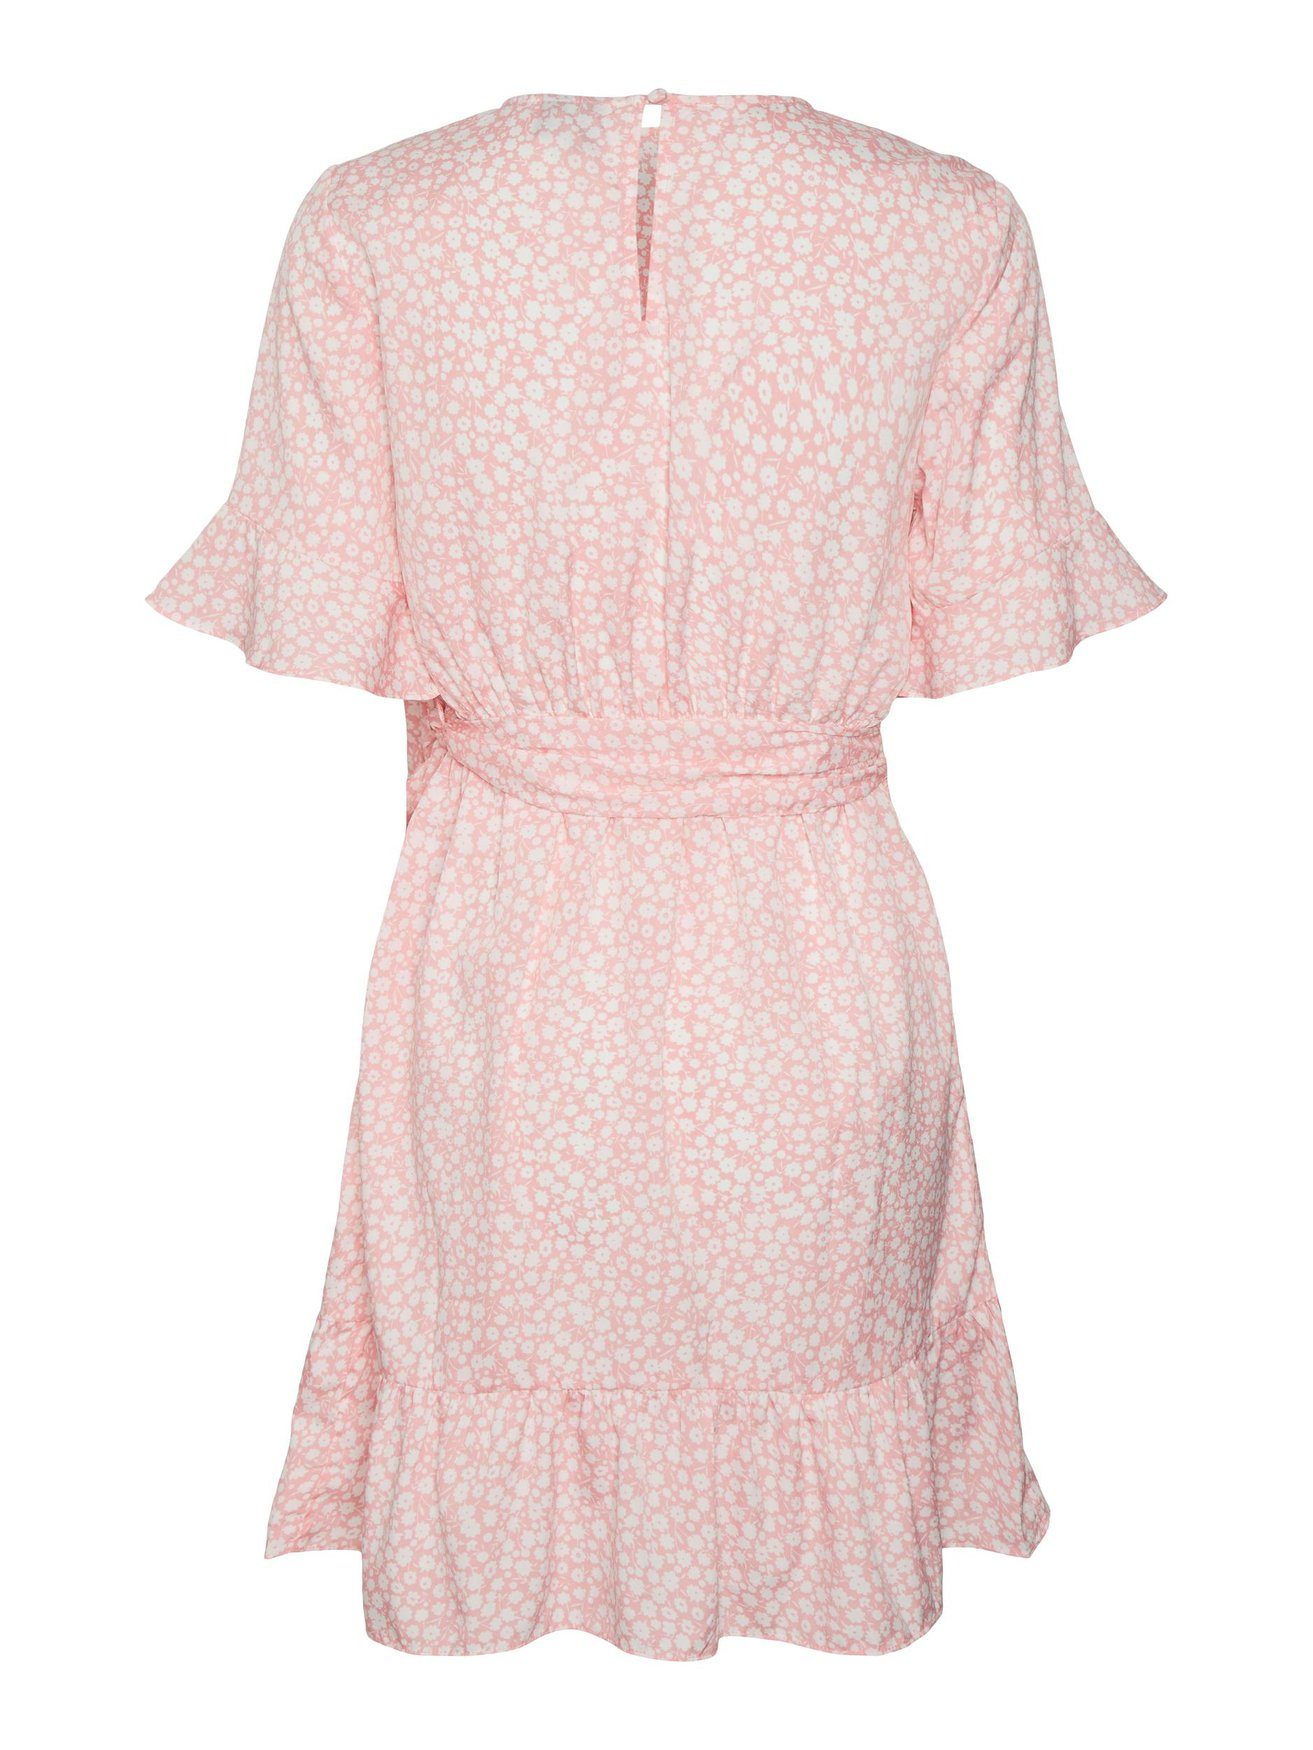 Wickel (kurz) Kurzes VMHENNA Moda Shirtkleid Kleid Mini in 5775 Vero Pink